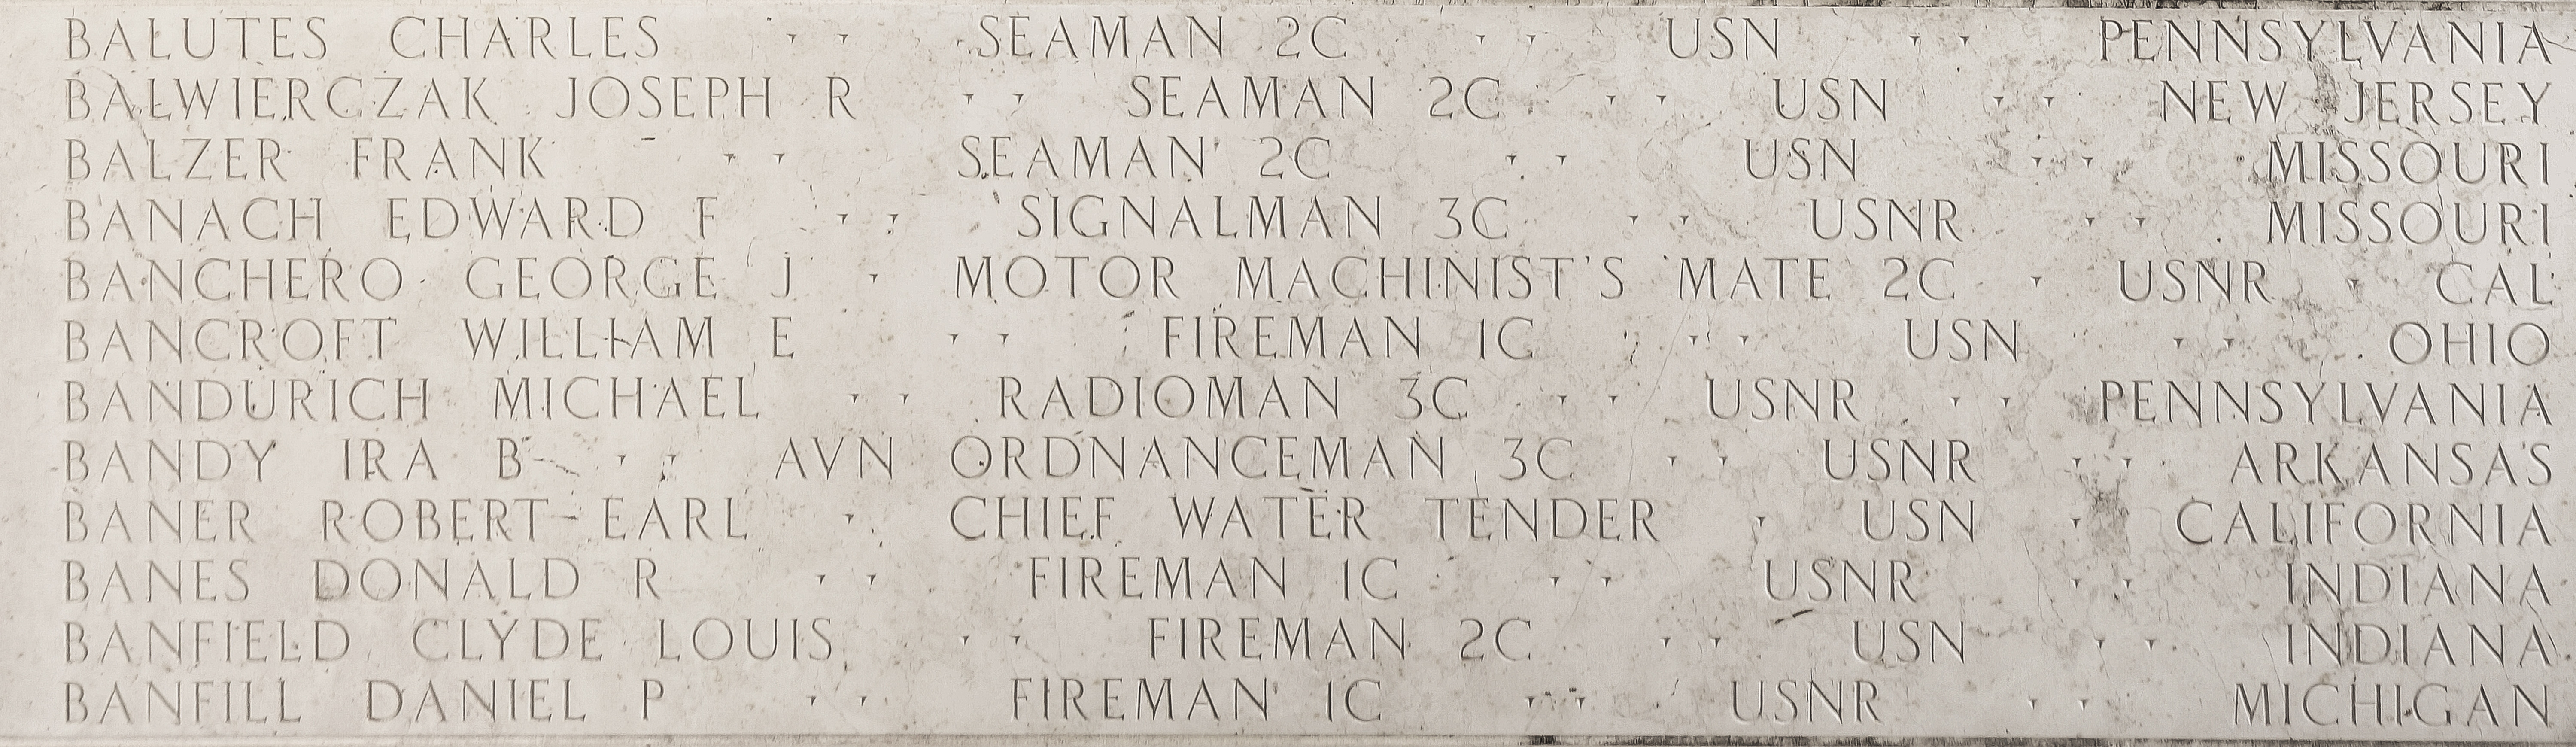 Edward F. Banach, Signalman Third Class